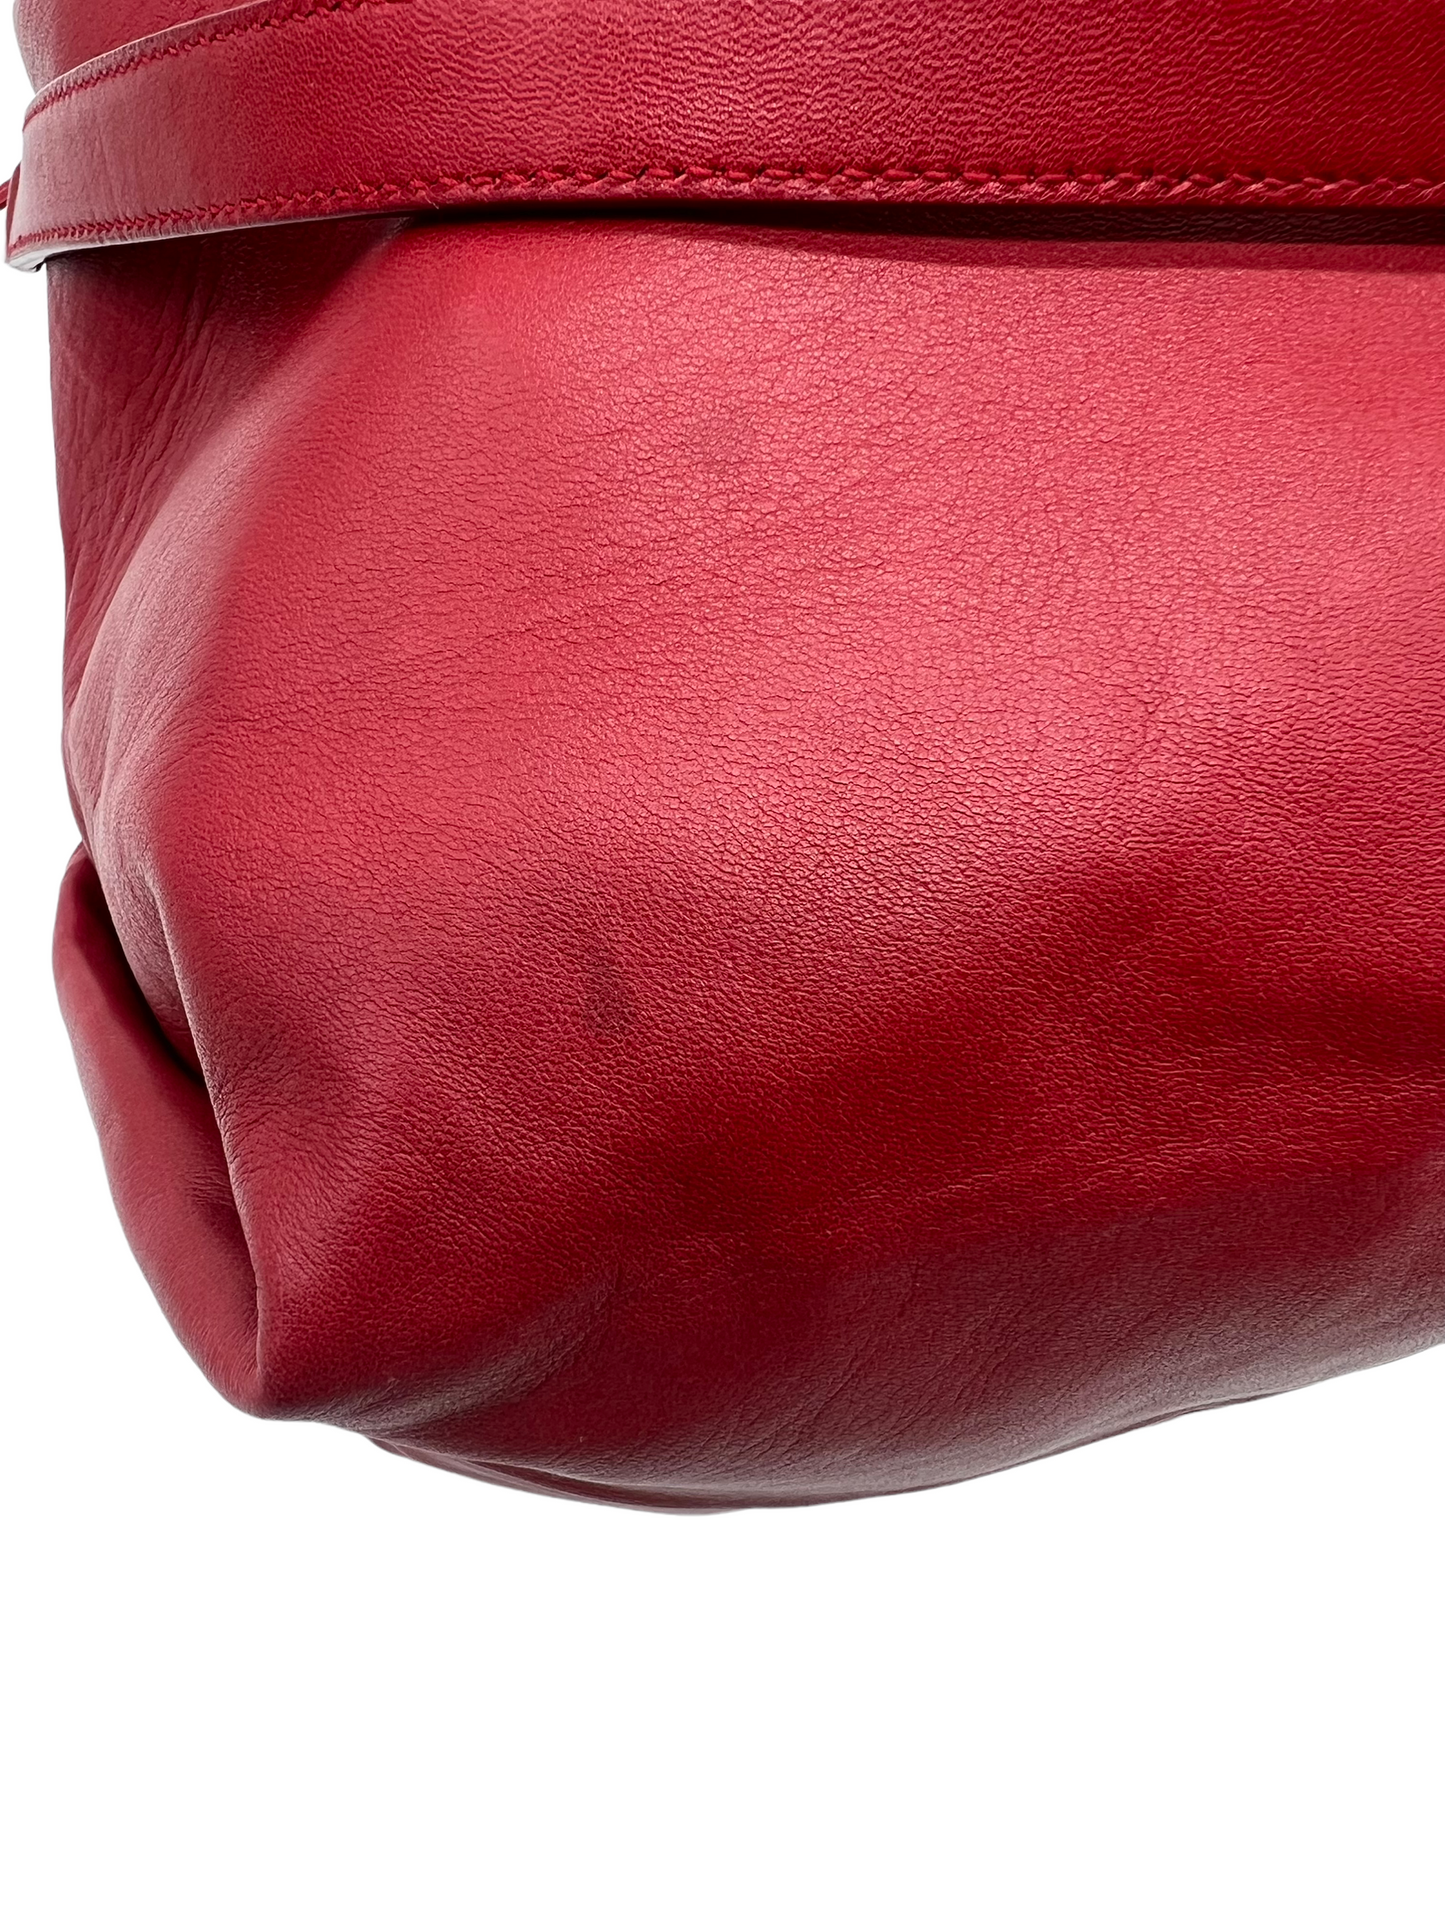 Saint Laurent YSL Red Leather Large Teddy Drawstring Bucket Bag